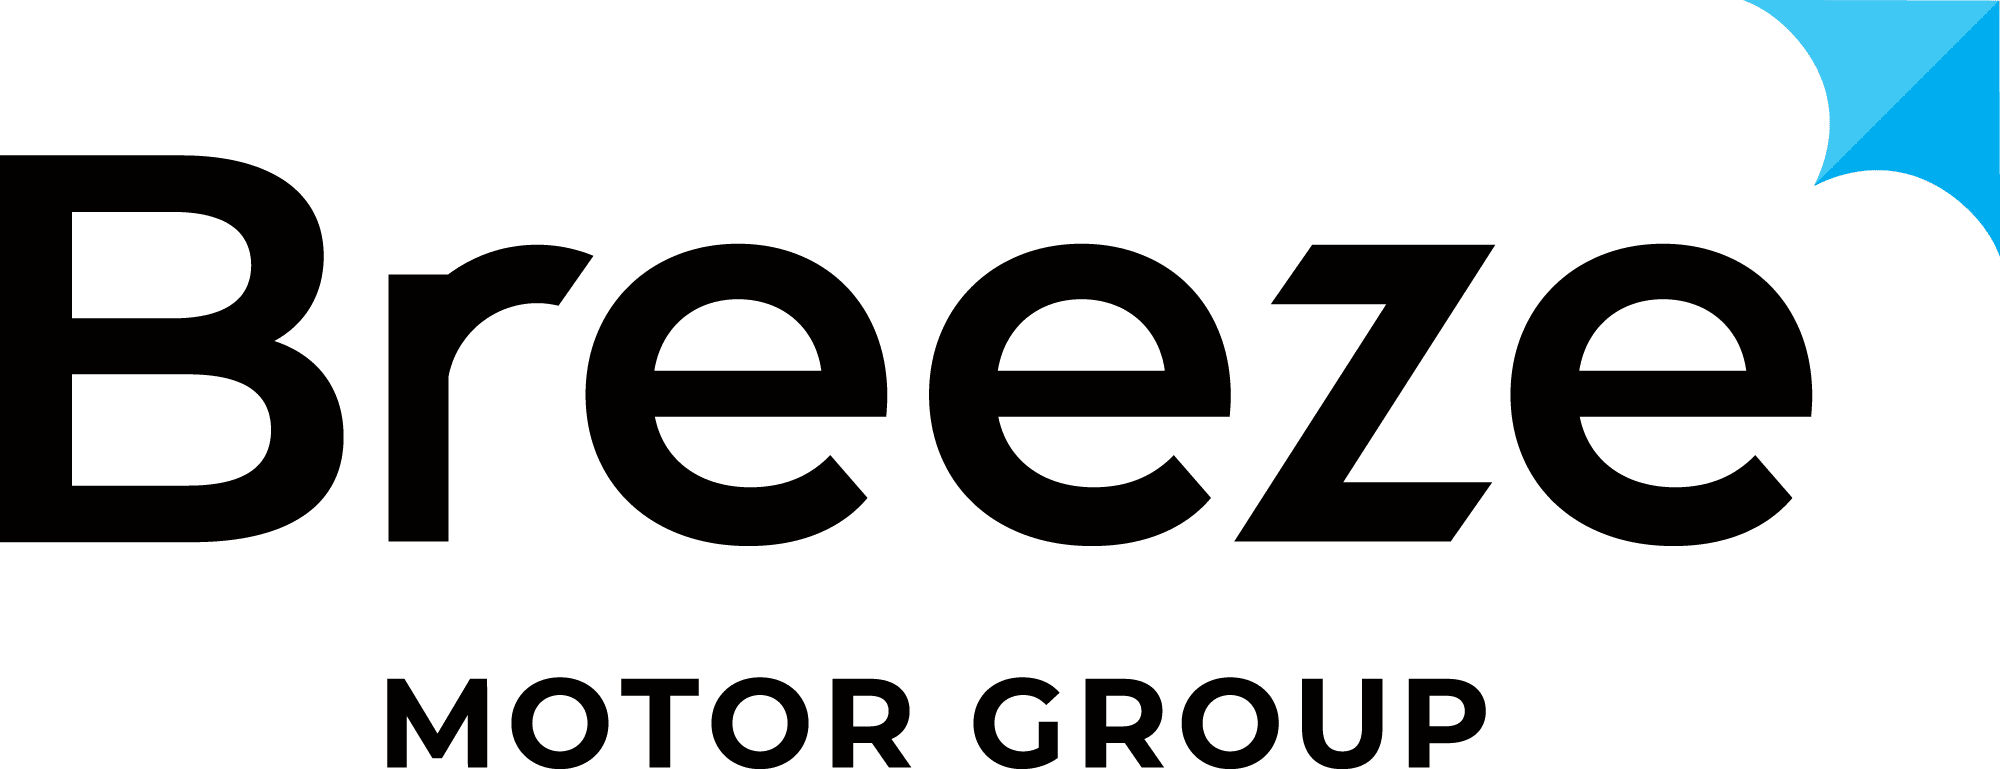 Breeze Motor Group